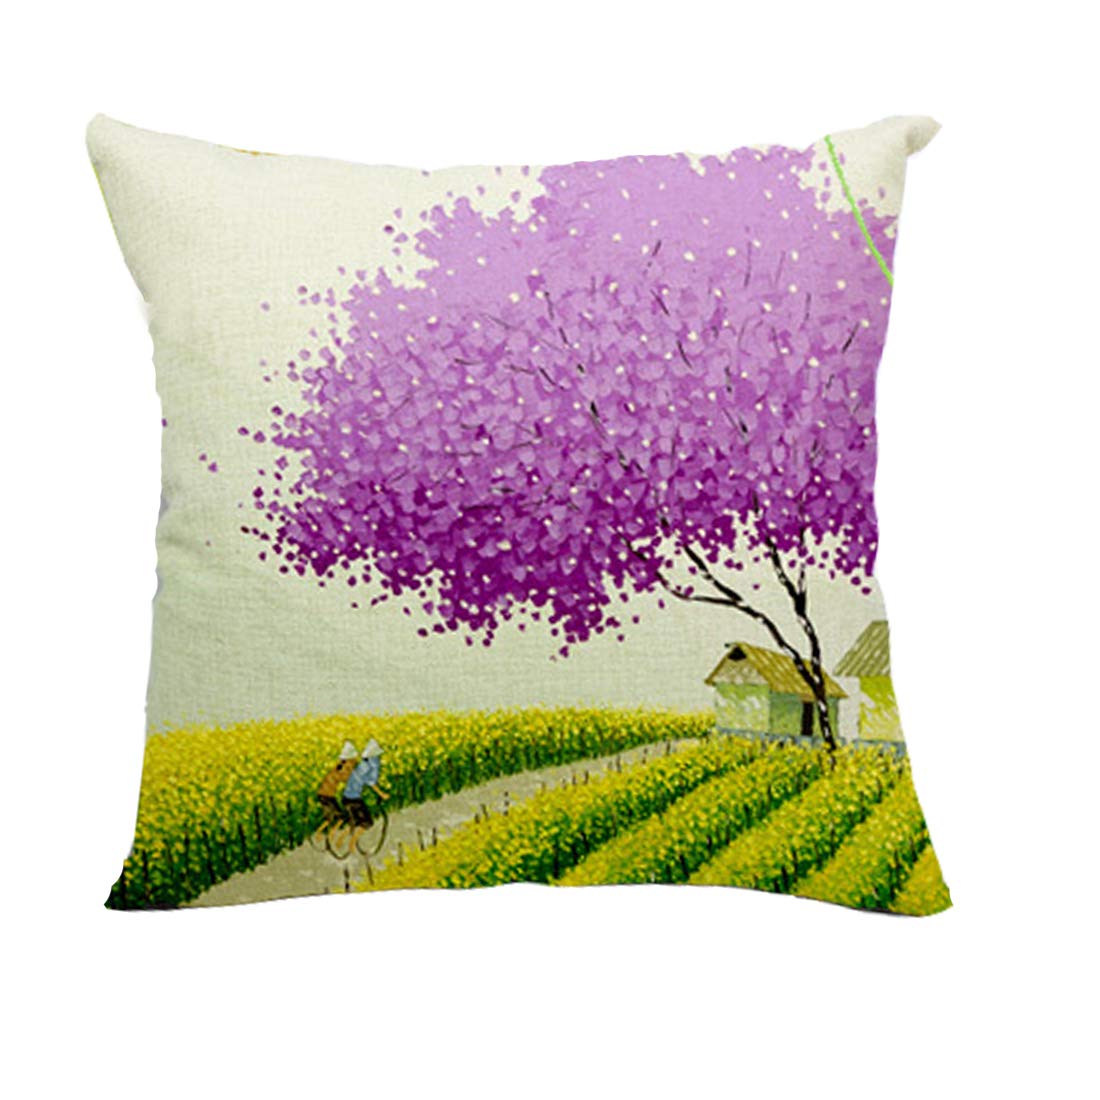 Detec Desi Kapda Floral Cushions Cover